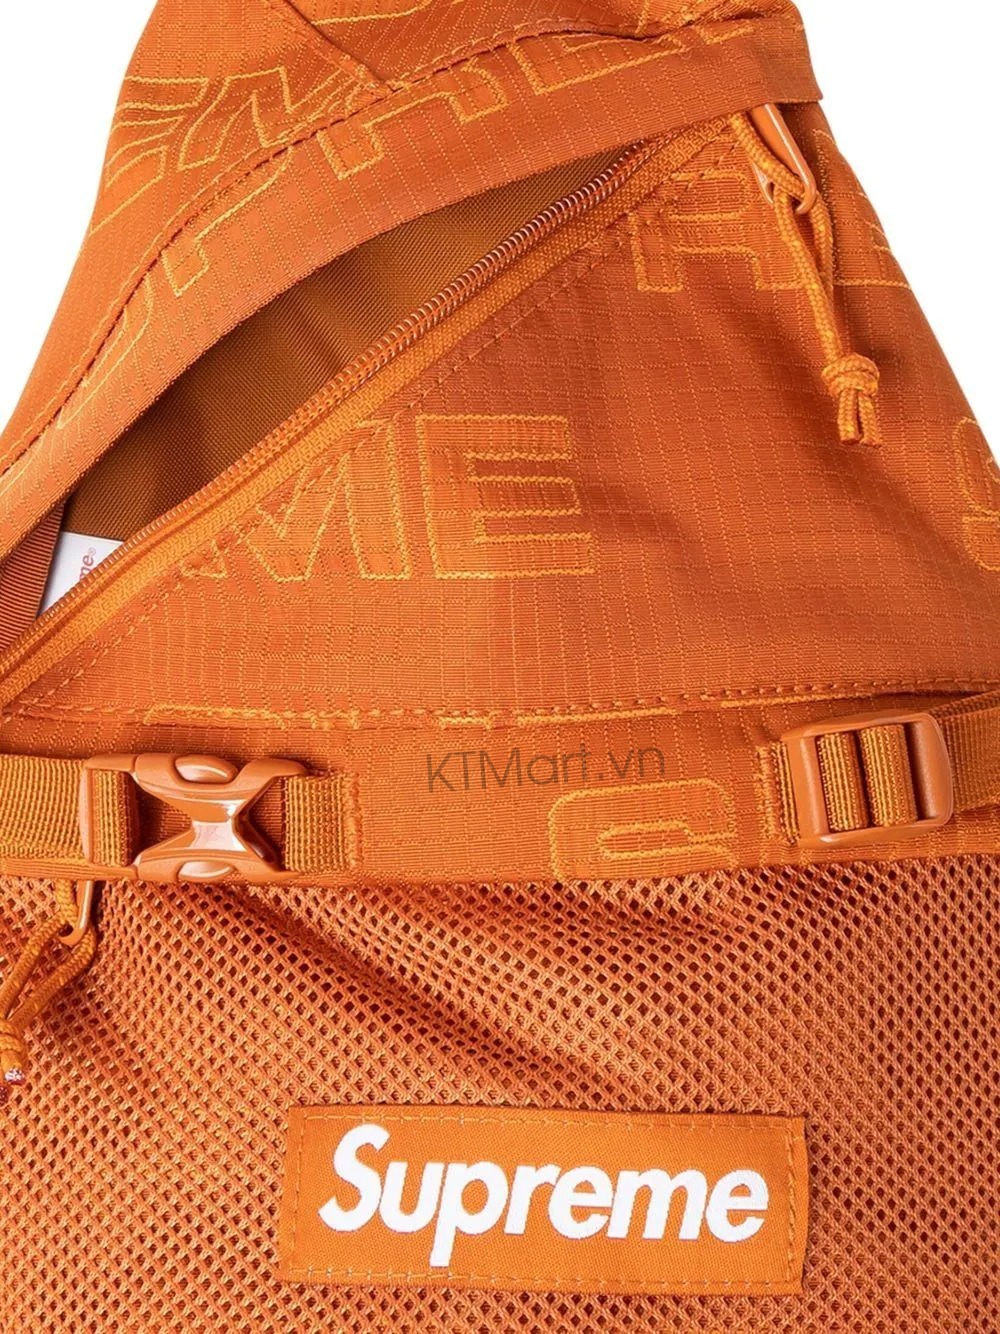 Buy Supreme Bags: Backpacks, Shoulder Bags & More | GOAT